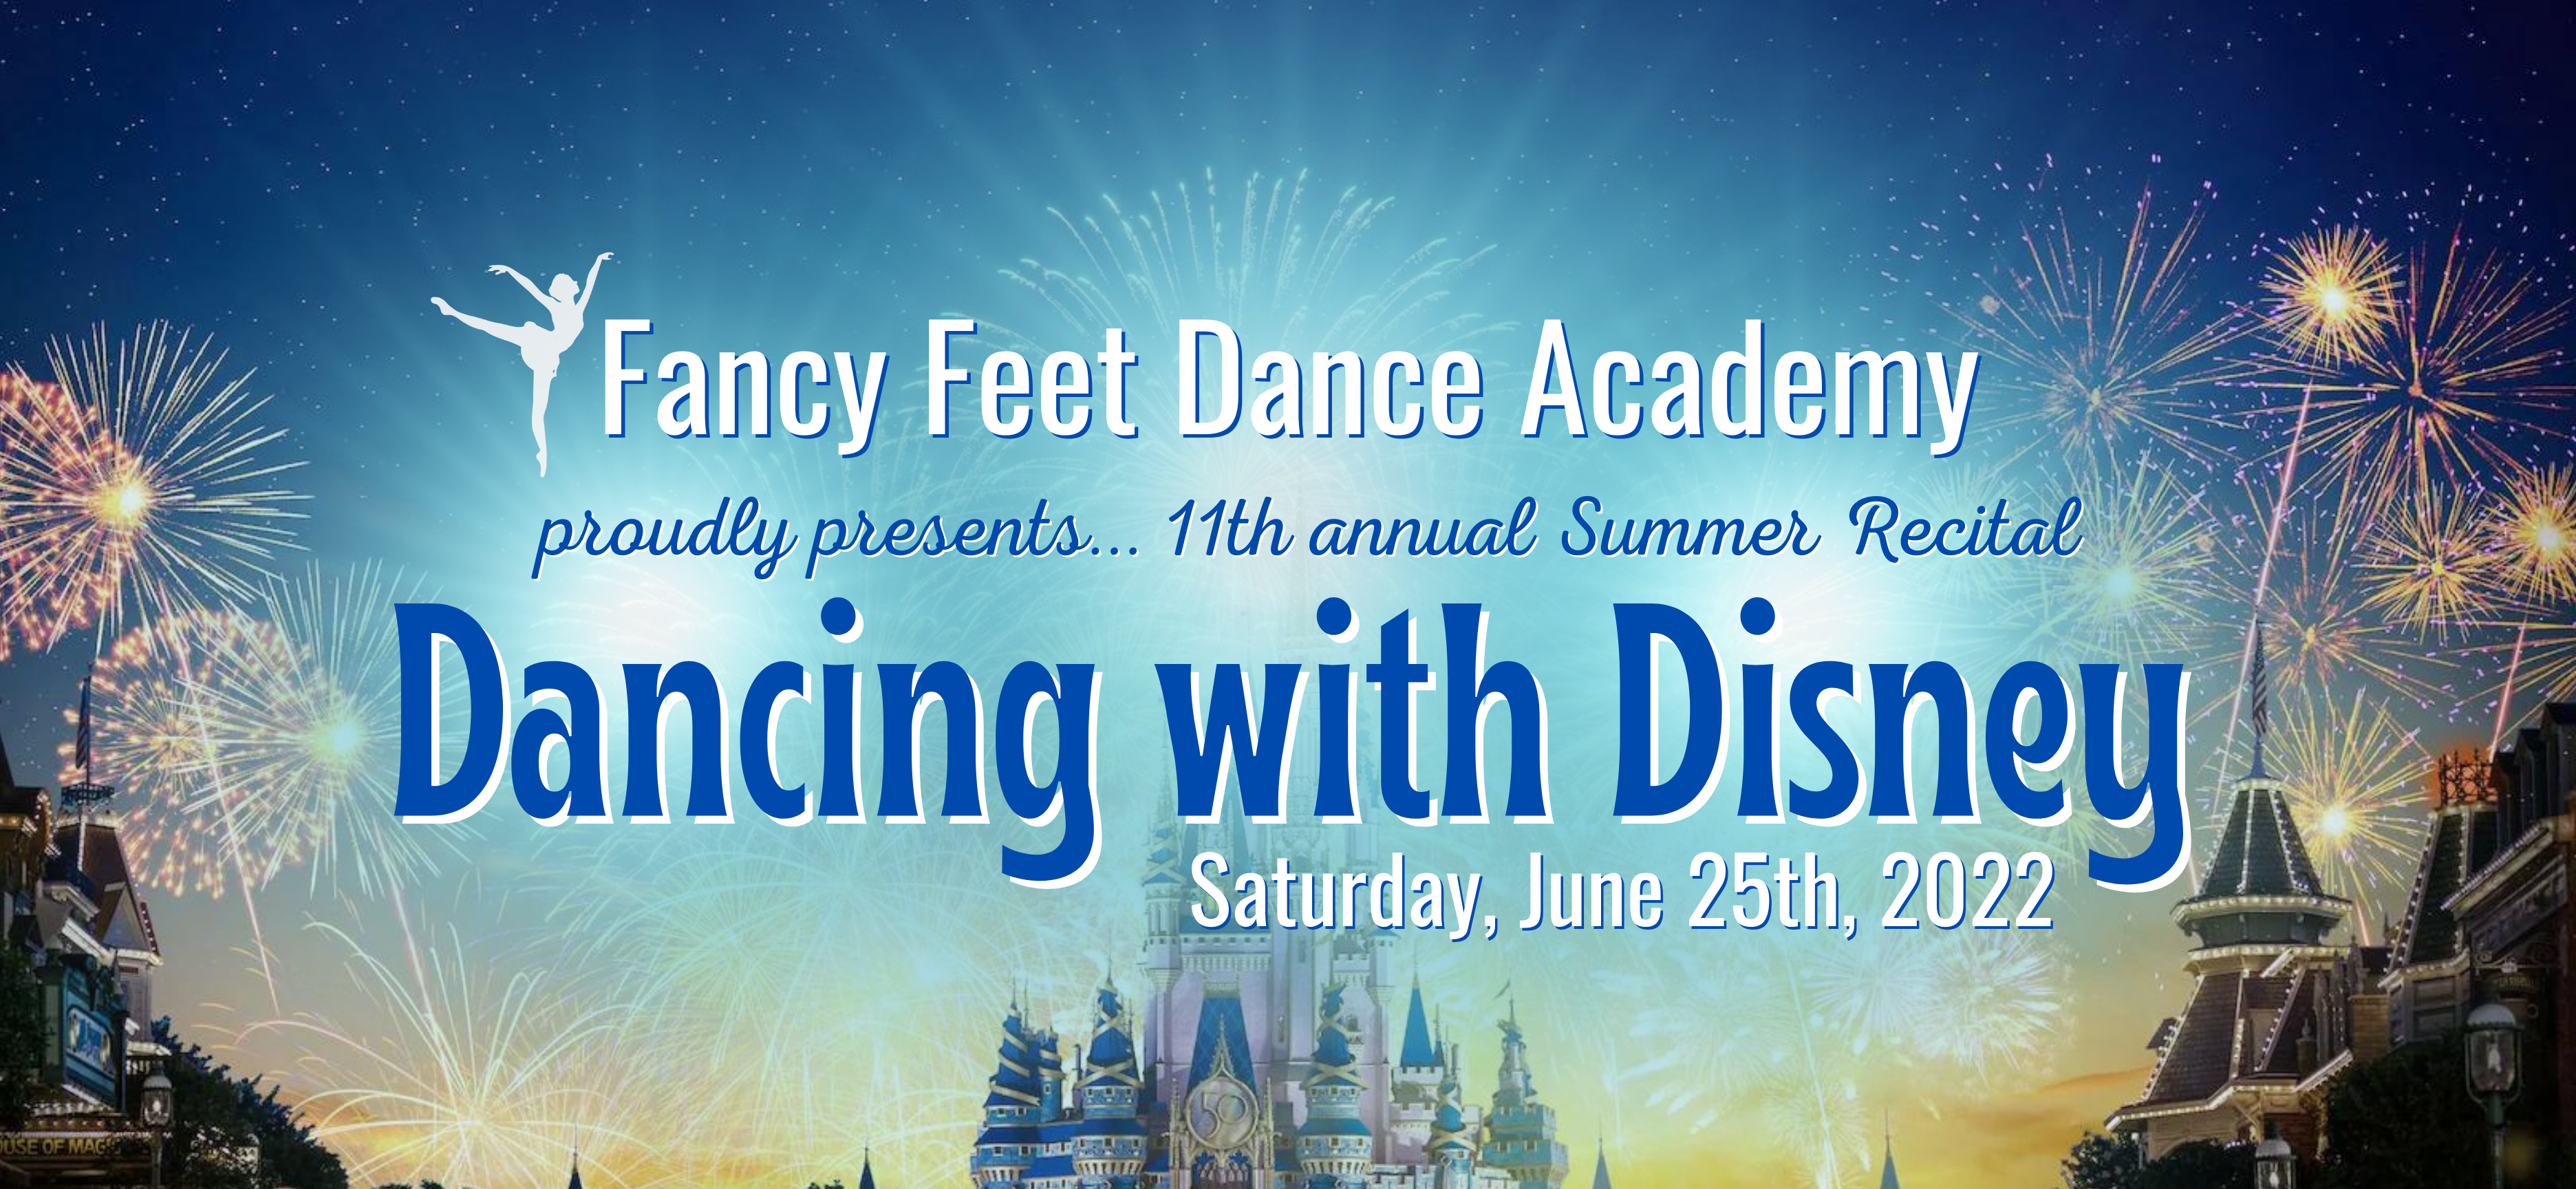 DRT-Premium-Ticket-Fancy-Feet-Dance-Academy-(965 × 300 px) (1248 × 576 px) (1)